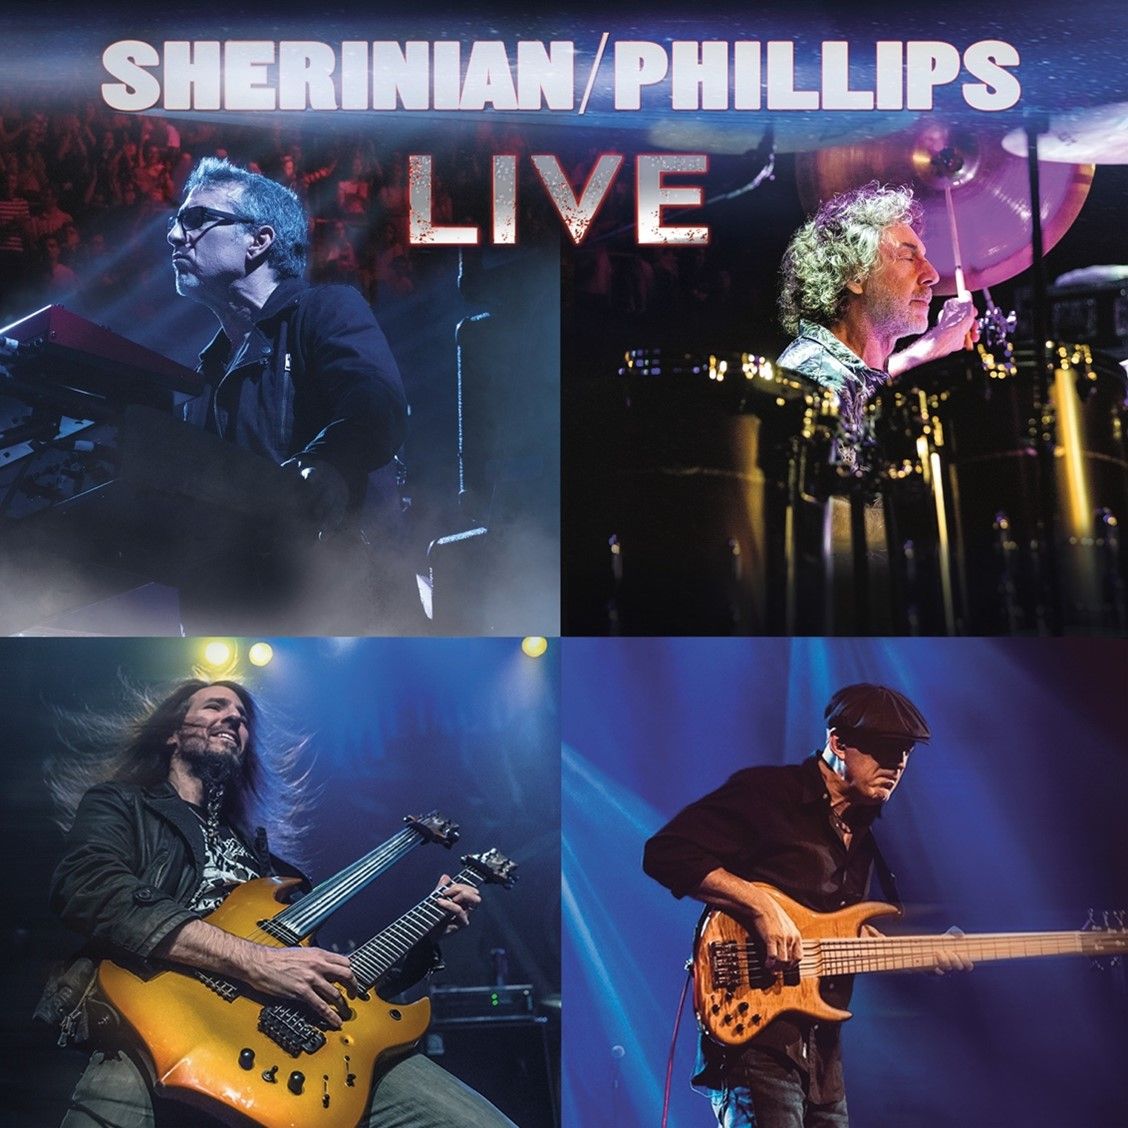 Sherinian/Phillips - "Sherinian/Phillips Live"